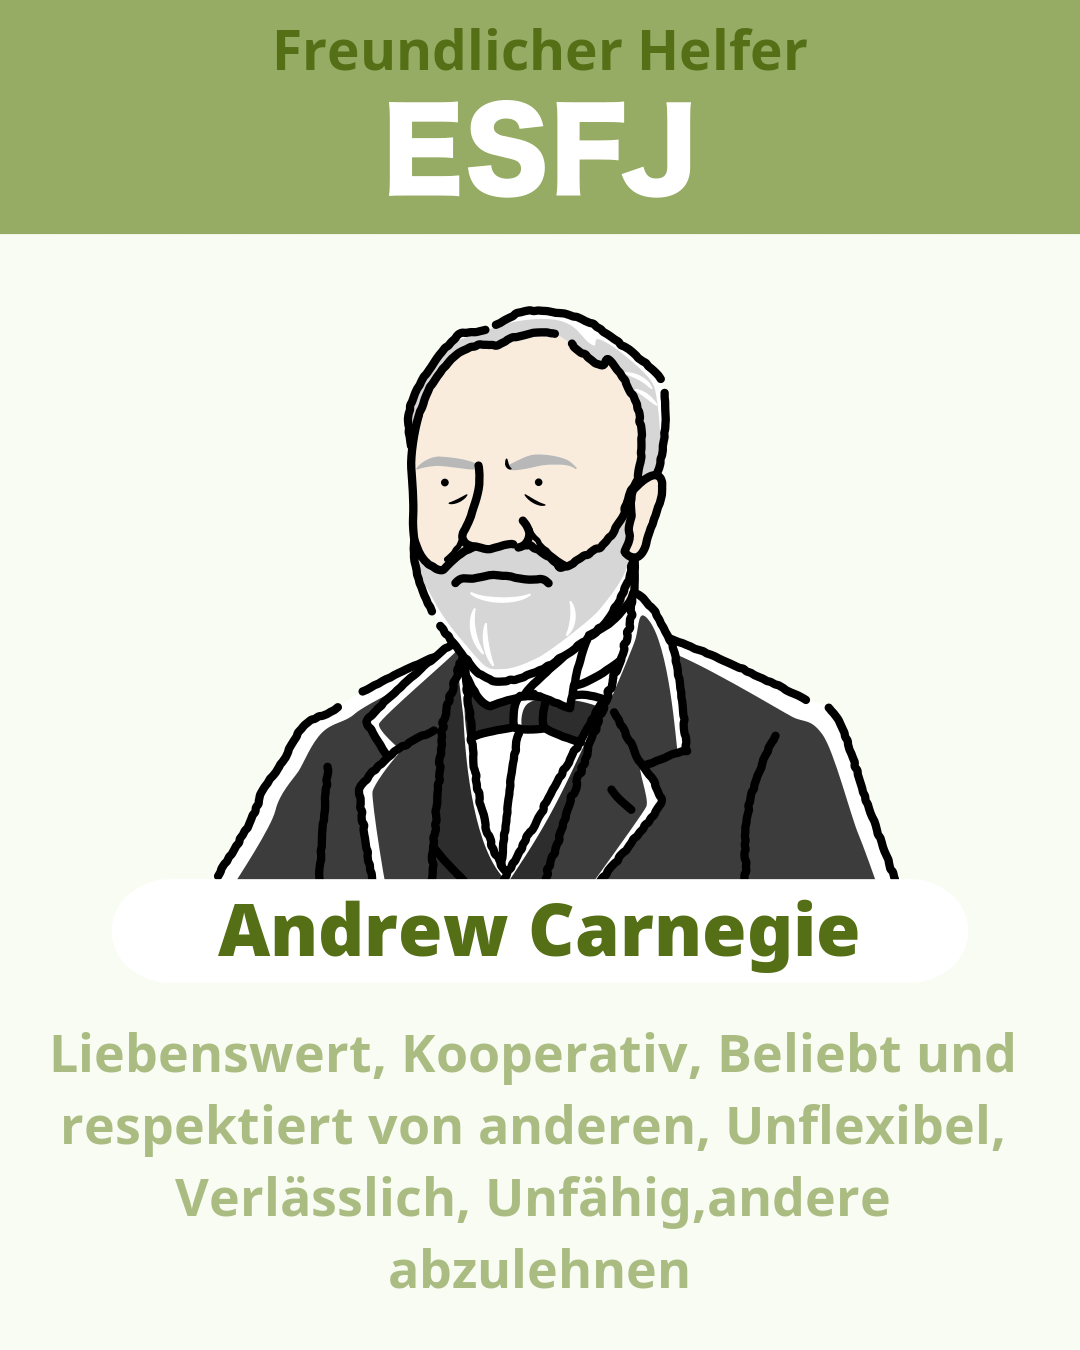 Andrew Carnegie - ESFJ